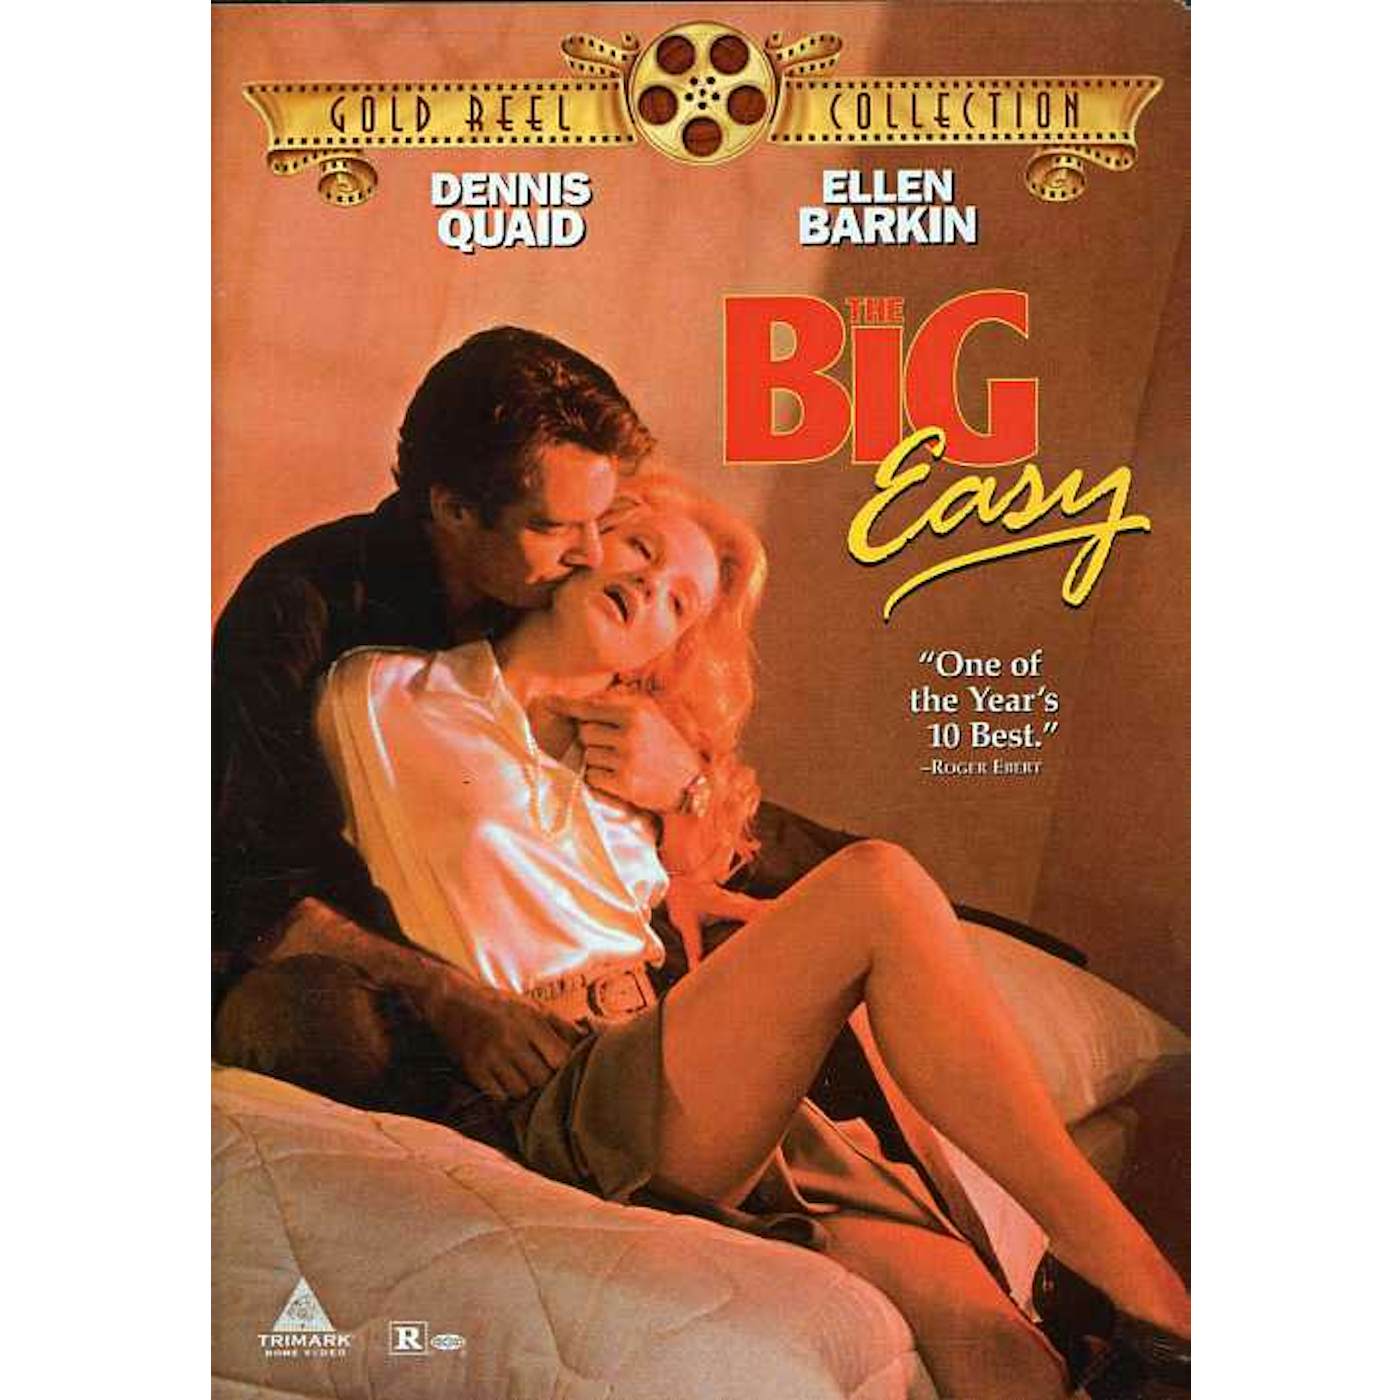 BIG EASY (1987) DVD